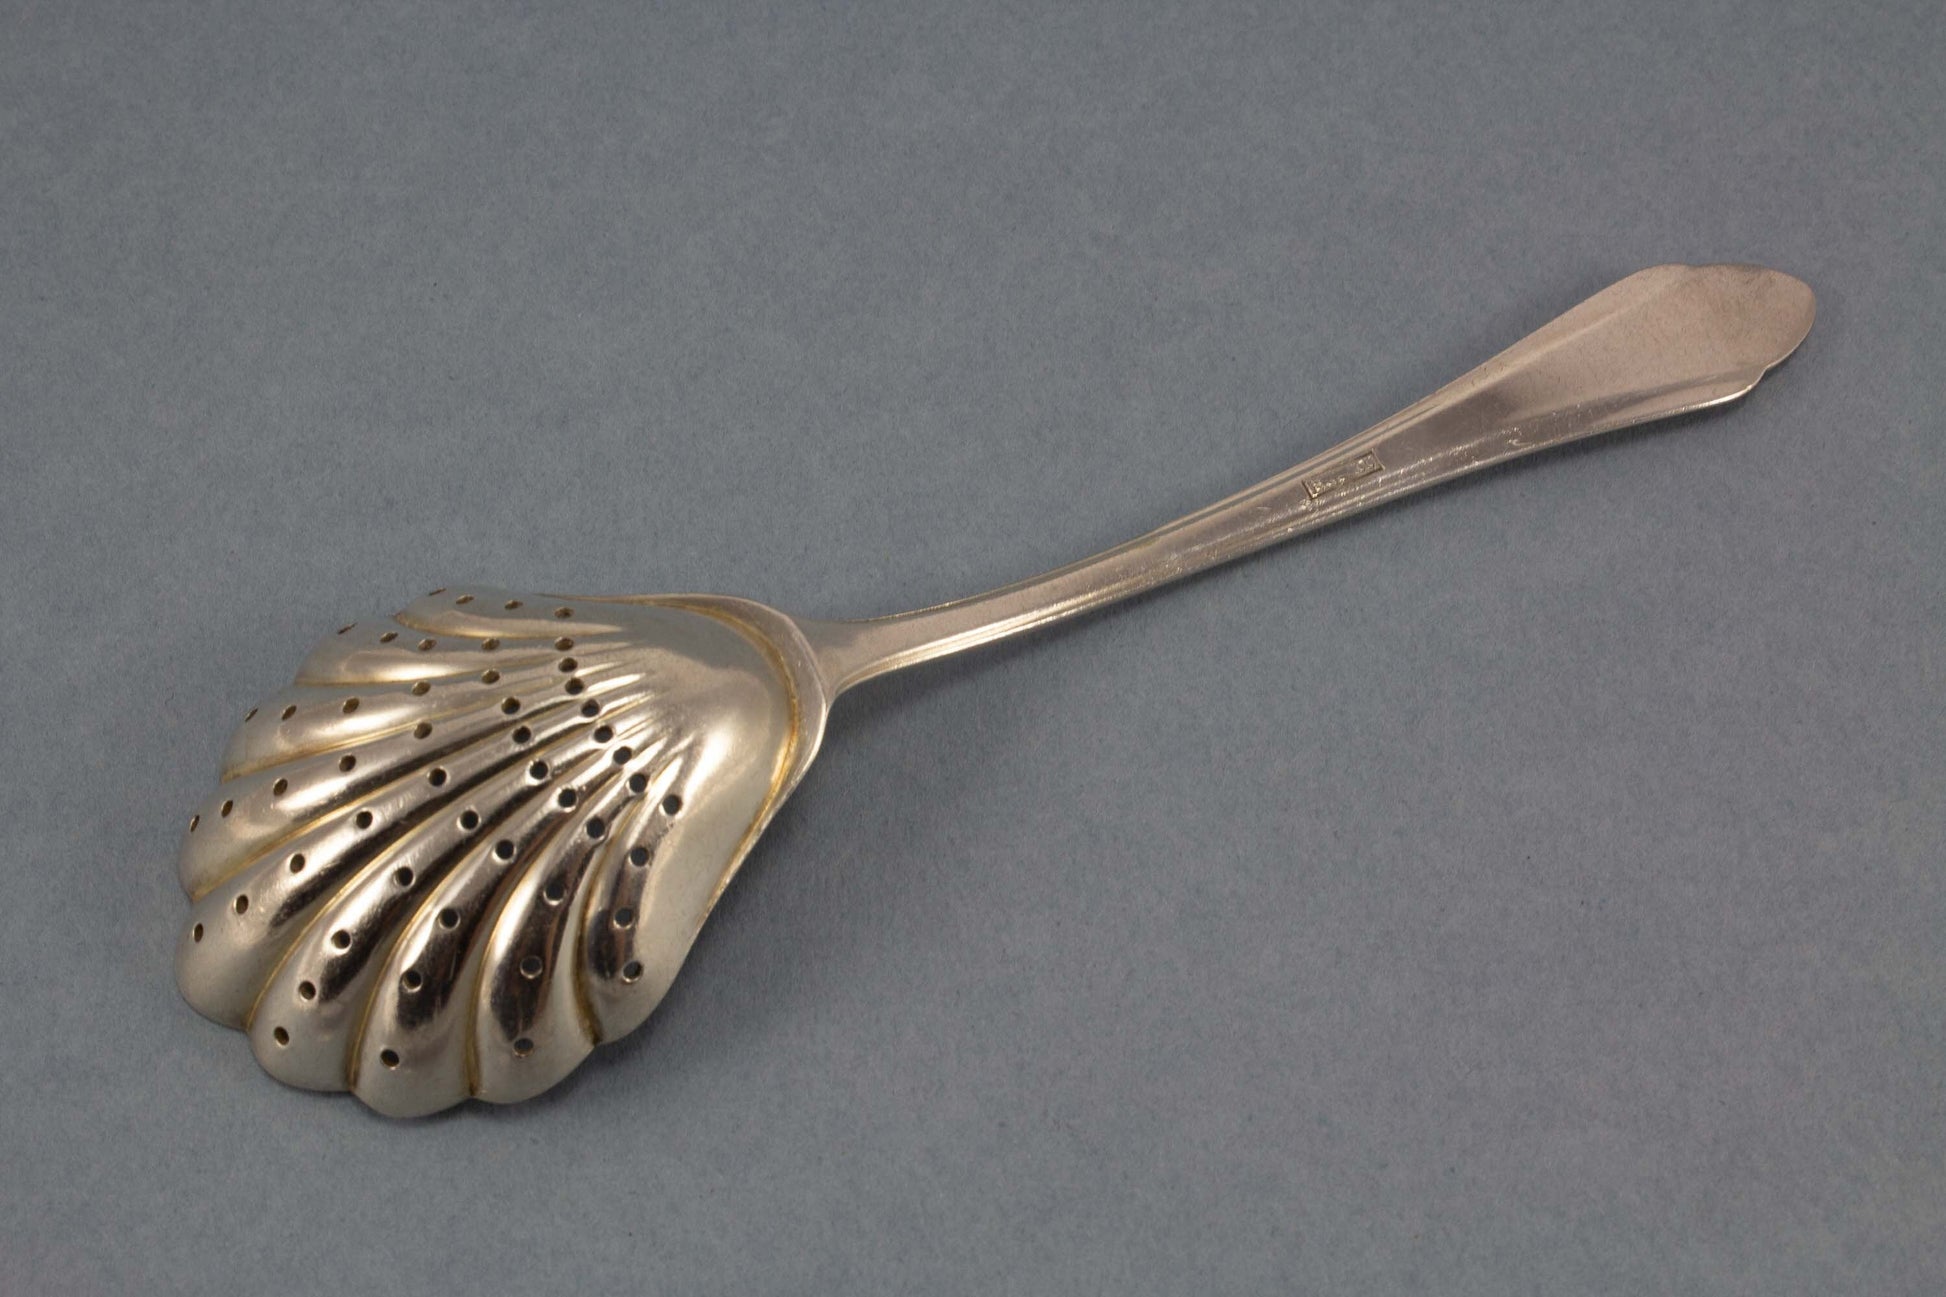 Silvered sugar spoon by BSF, sugar spreader